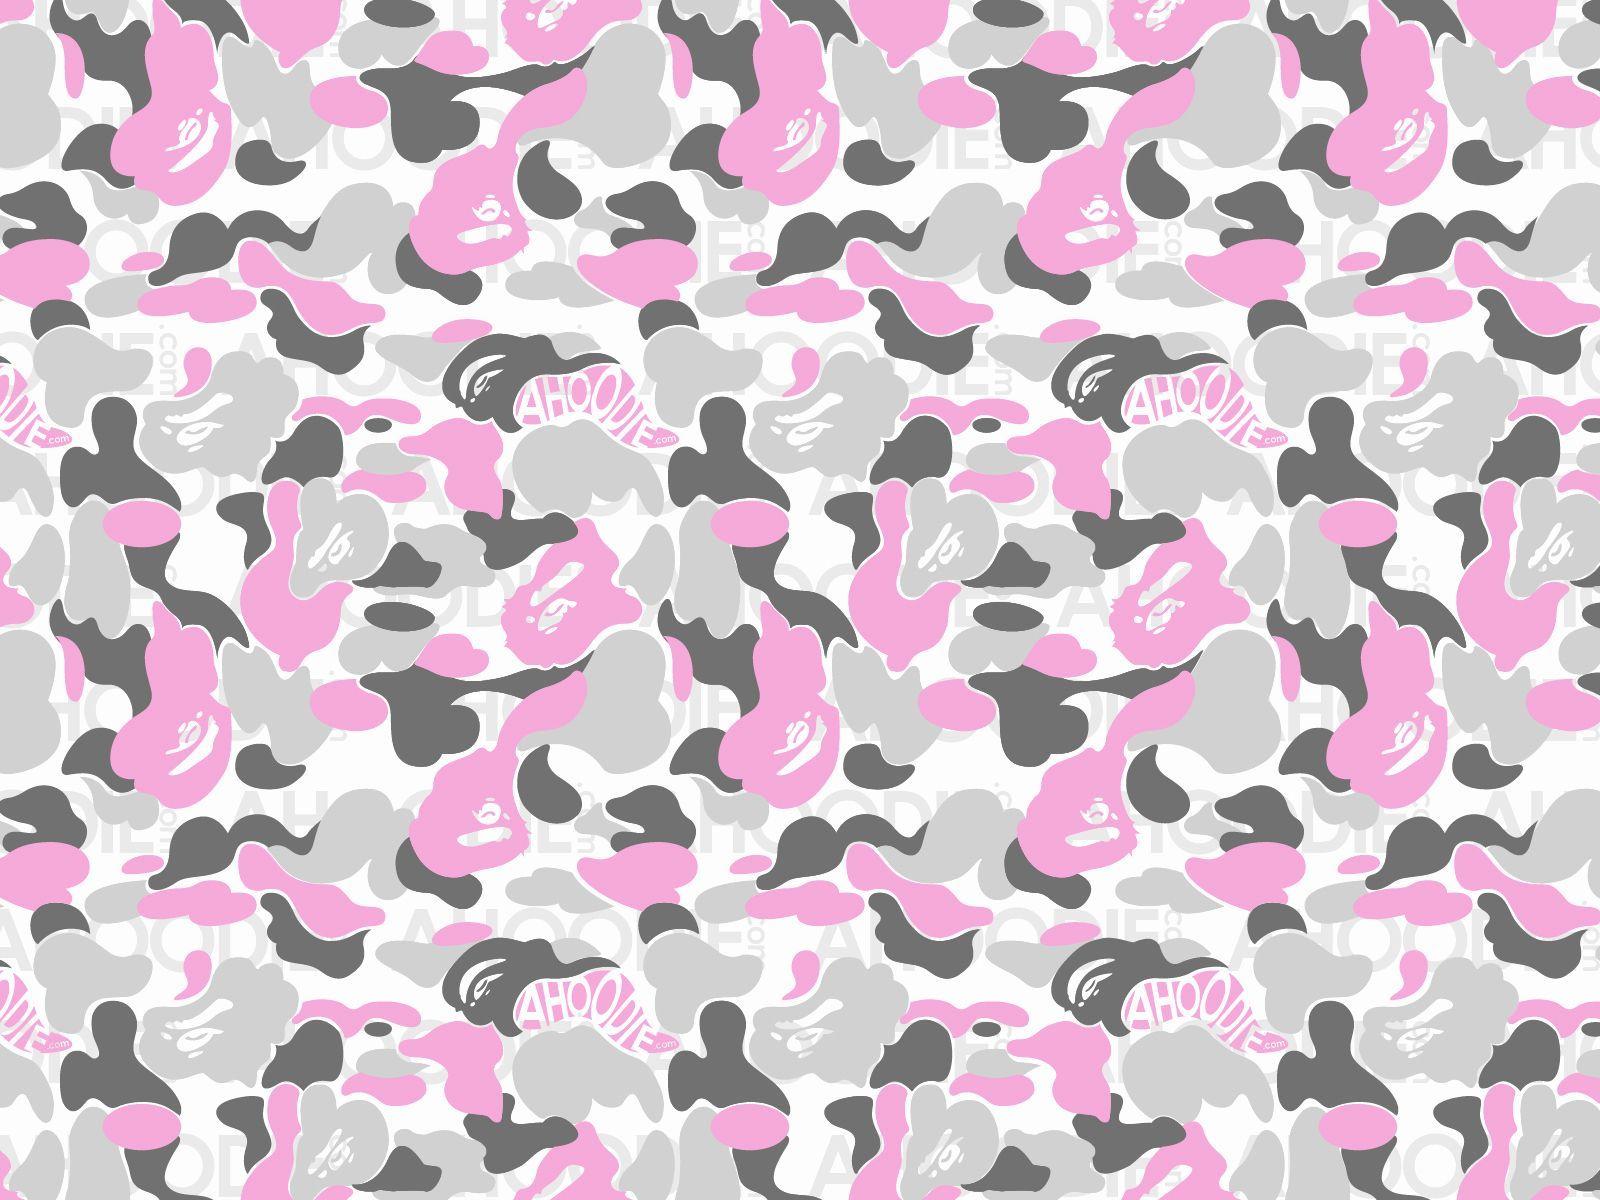 BAPE Pink Wallpapers - Top Free BAPE